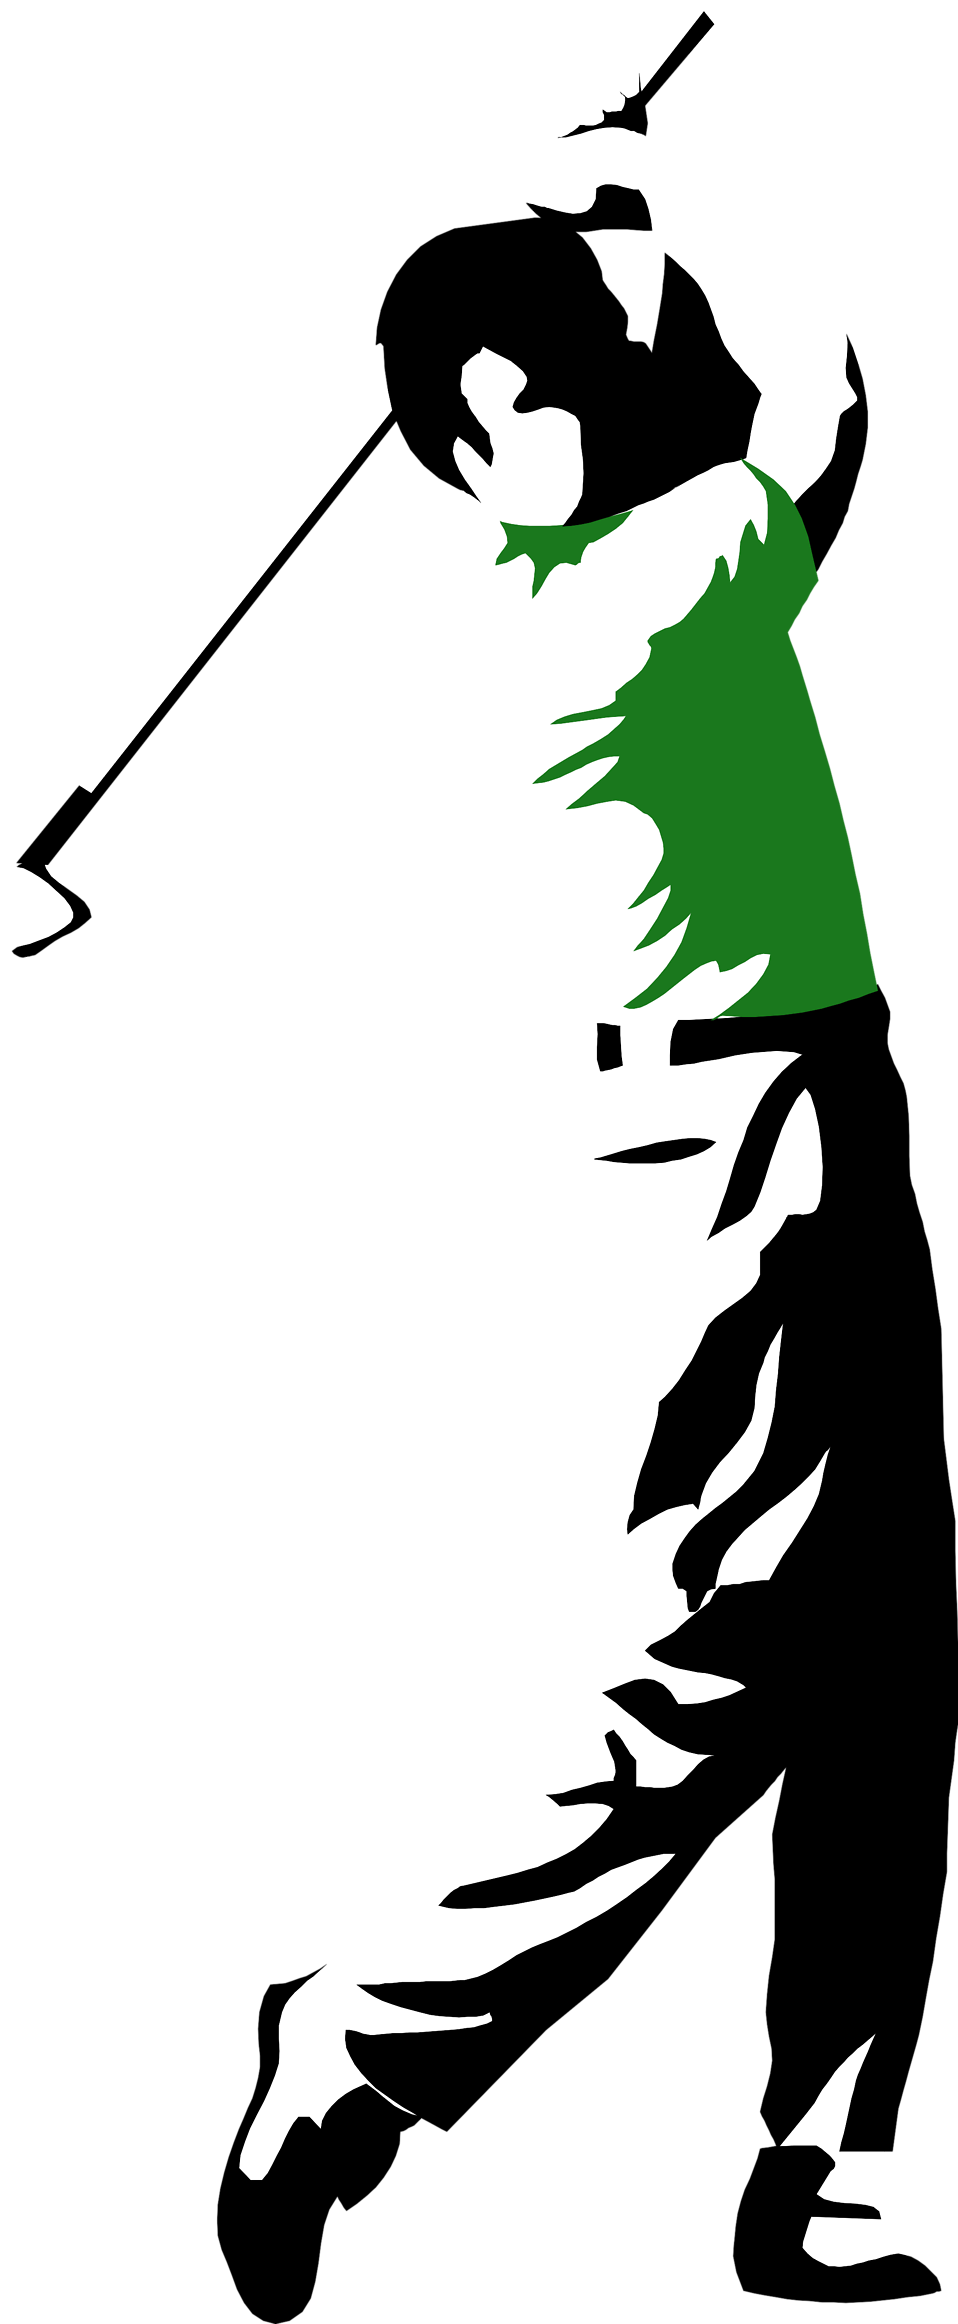 Golf Free Stock Photo Illustration of a man swinging a